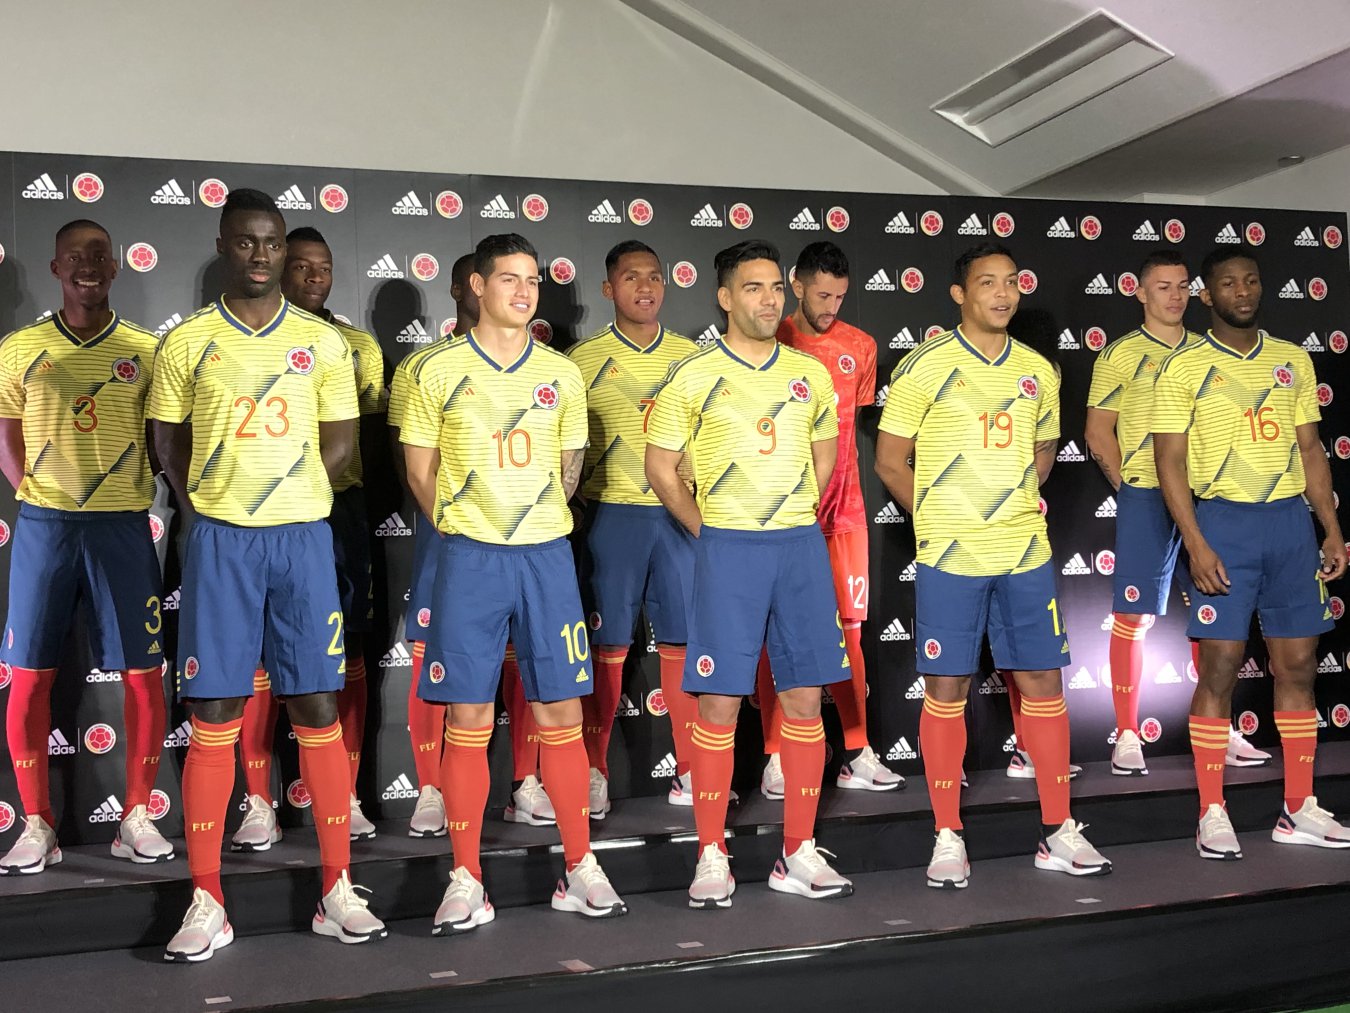 adidas camiseta seleccion colombia 2019